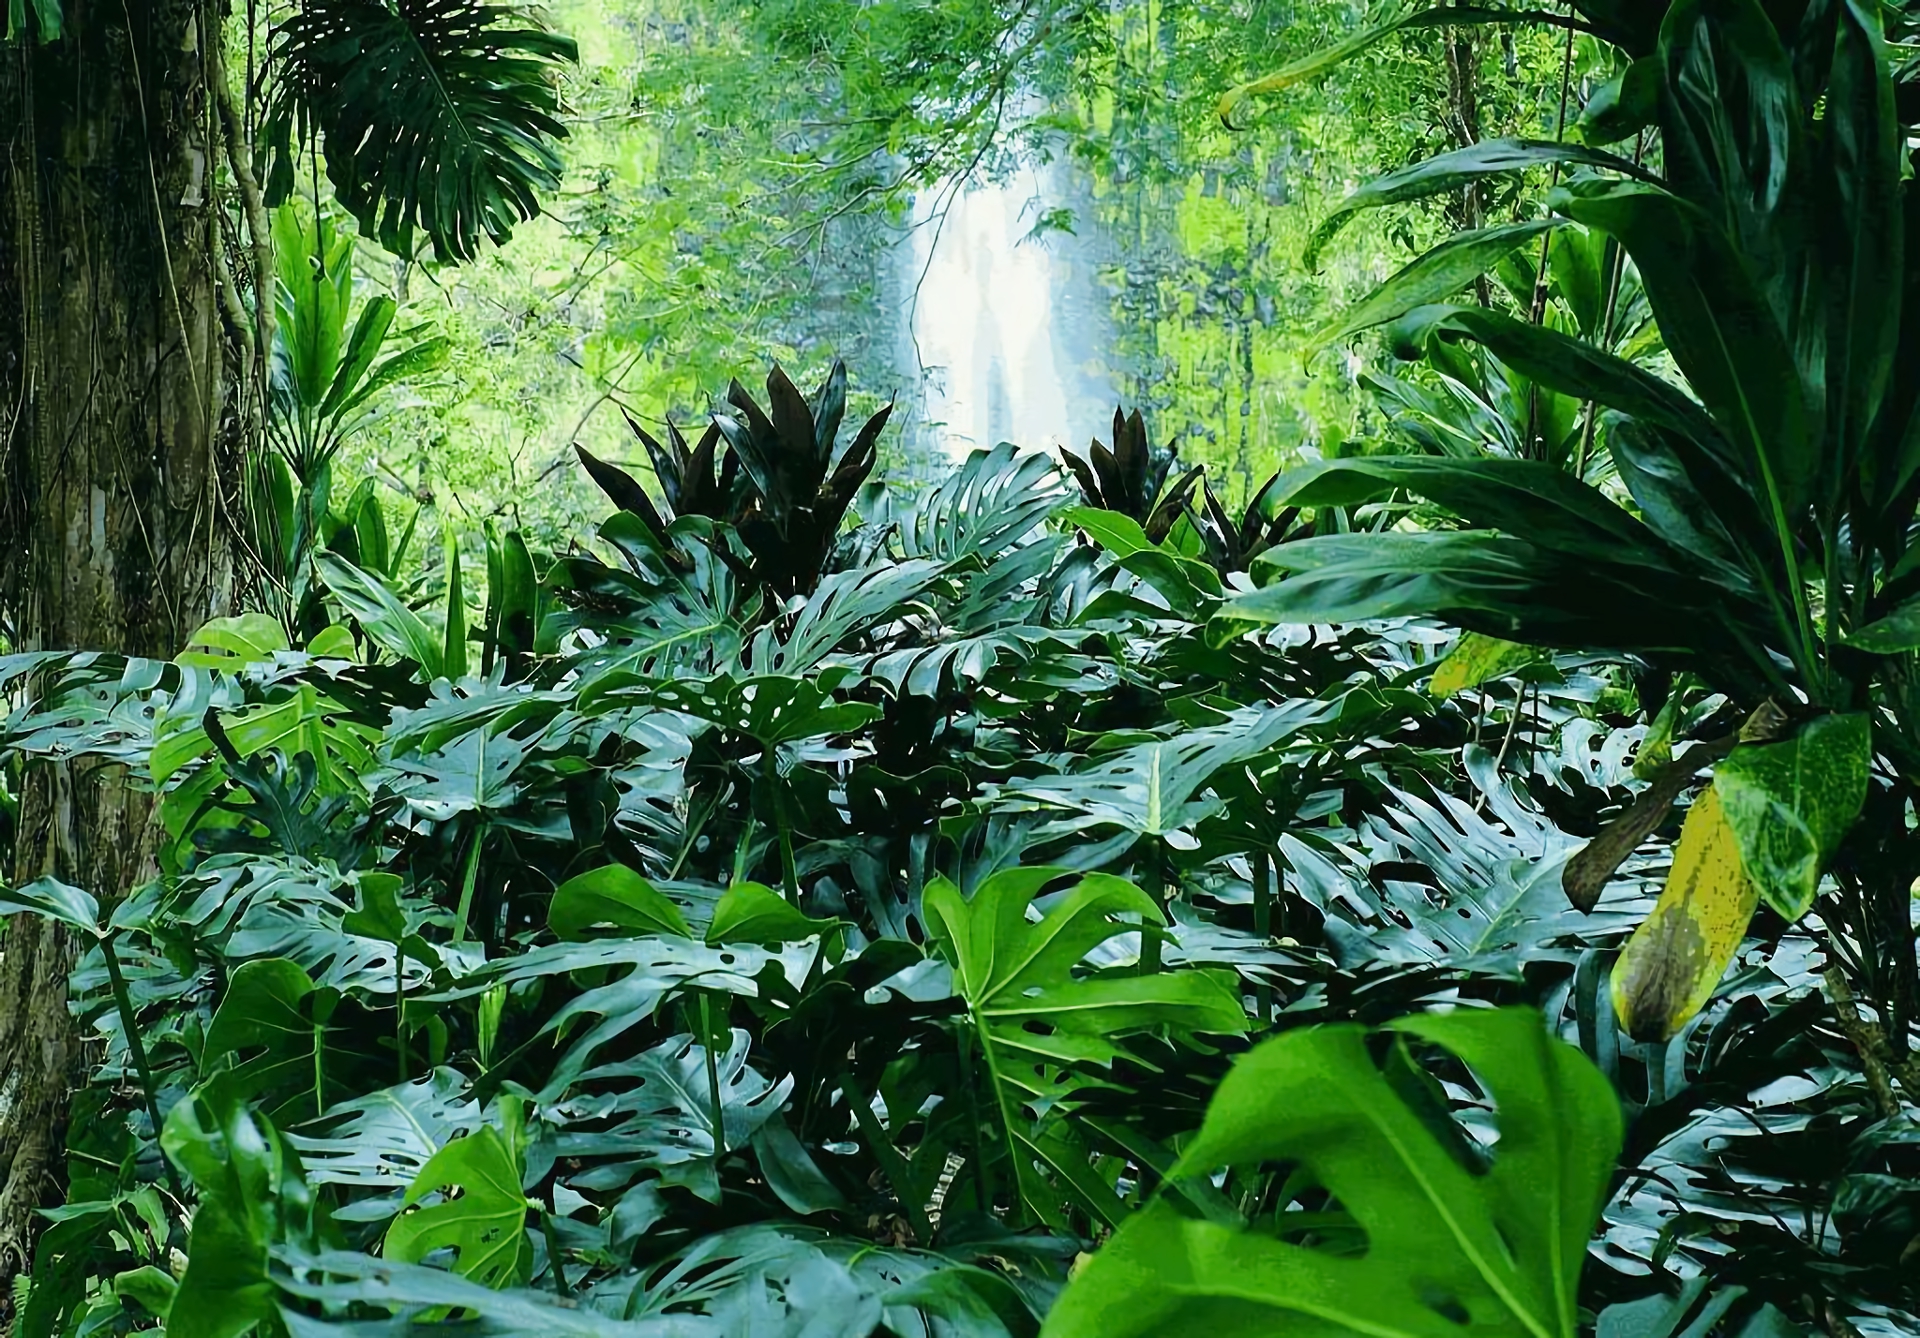 776097 descargar imagen tierra/naturaleza, jungla, bosque, verde, tropico, cascada: fondos de pantalla y protectores de pantalla gratis